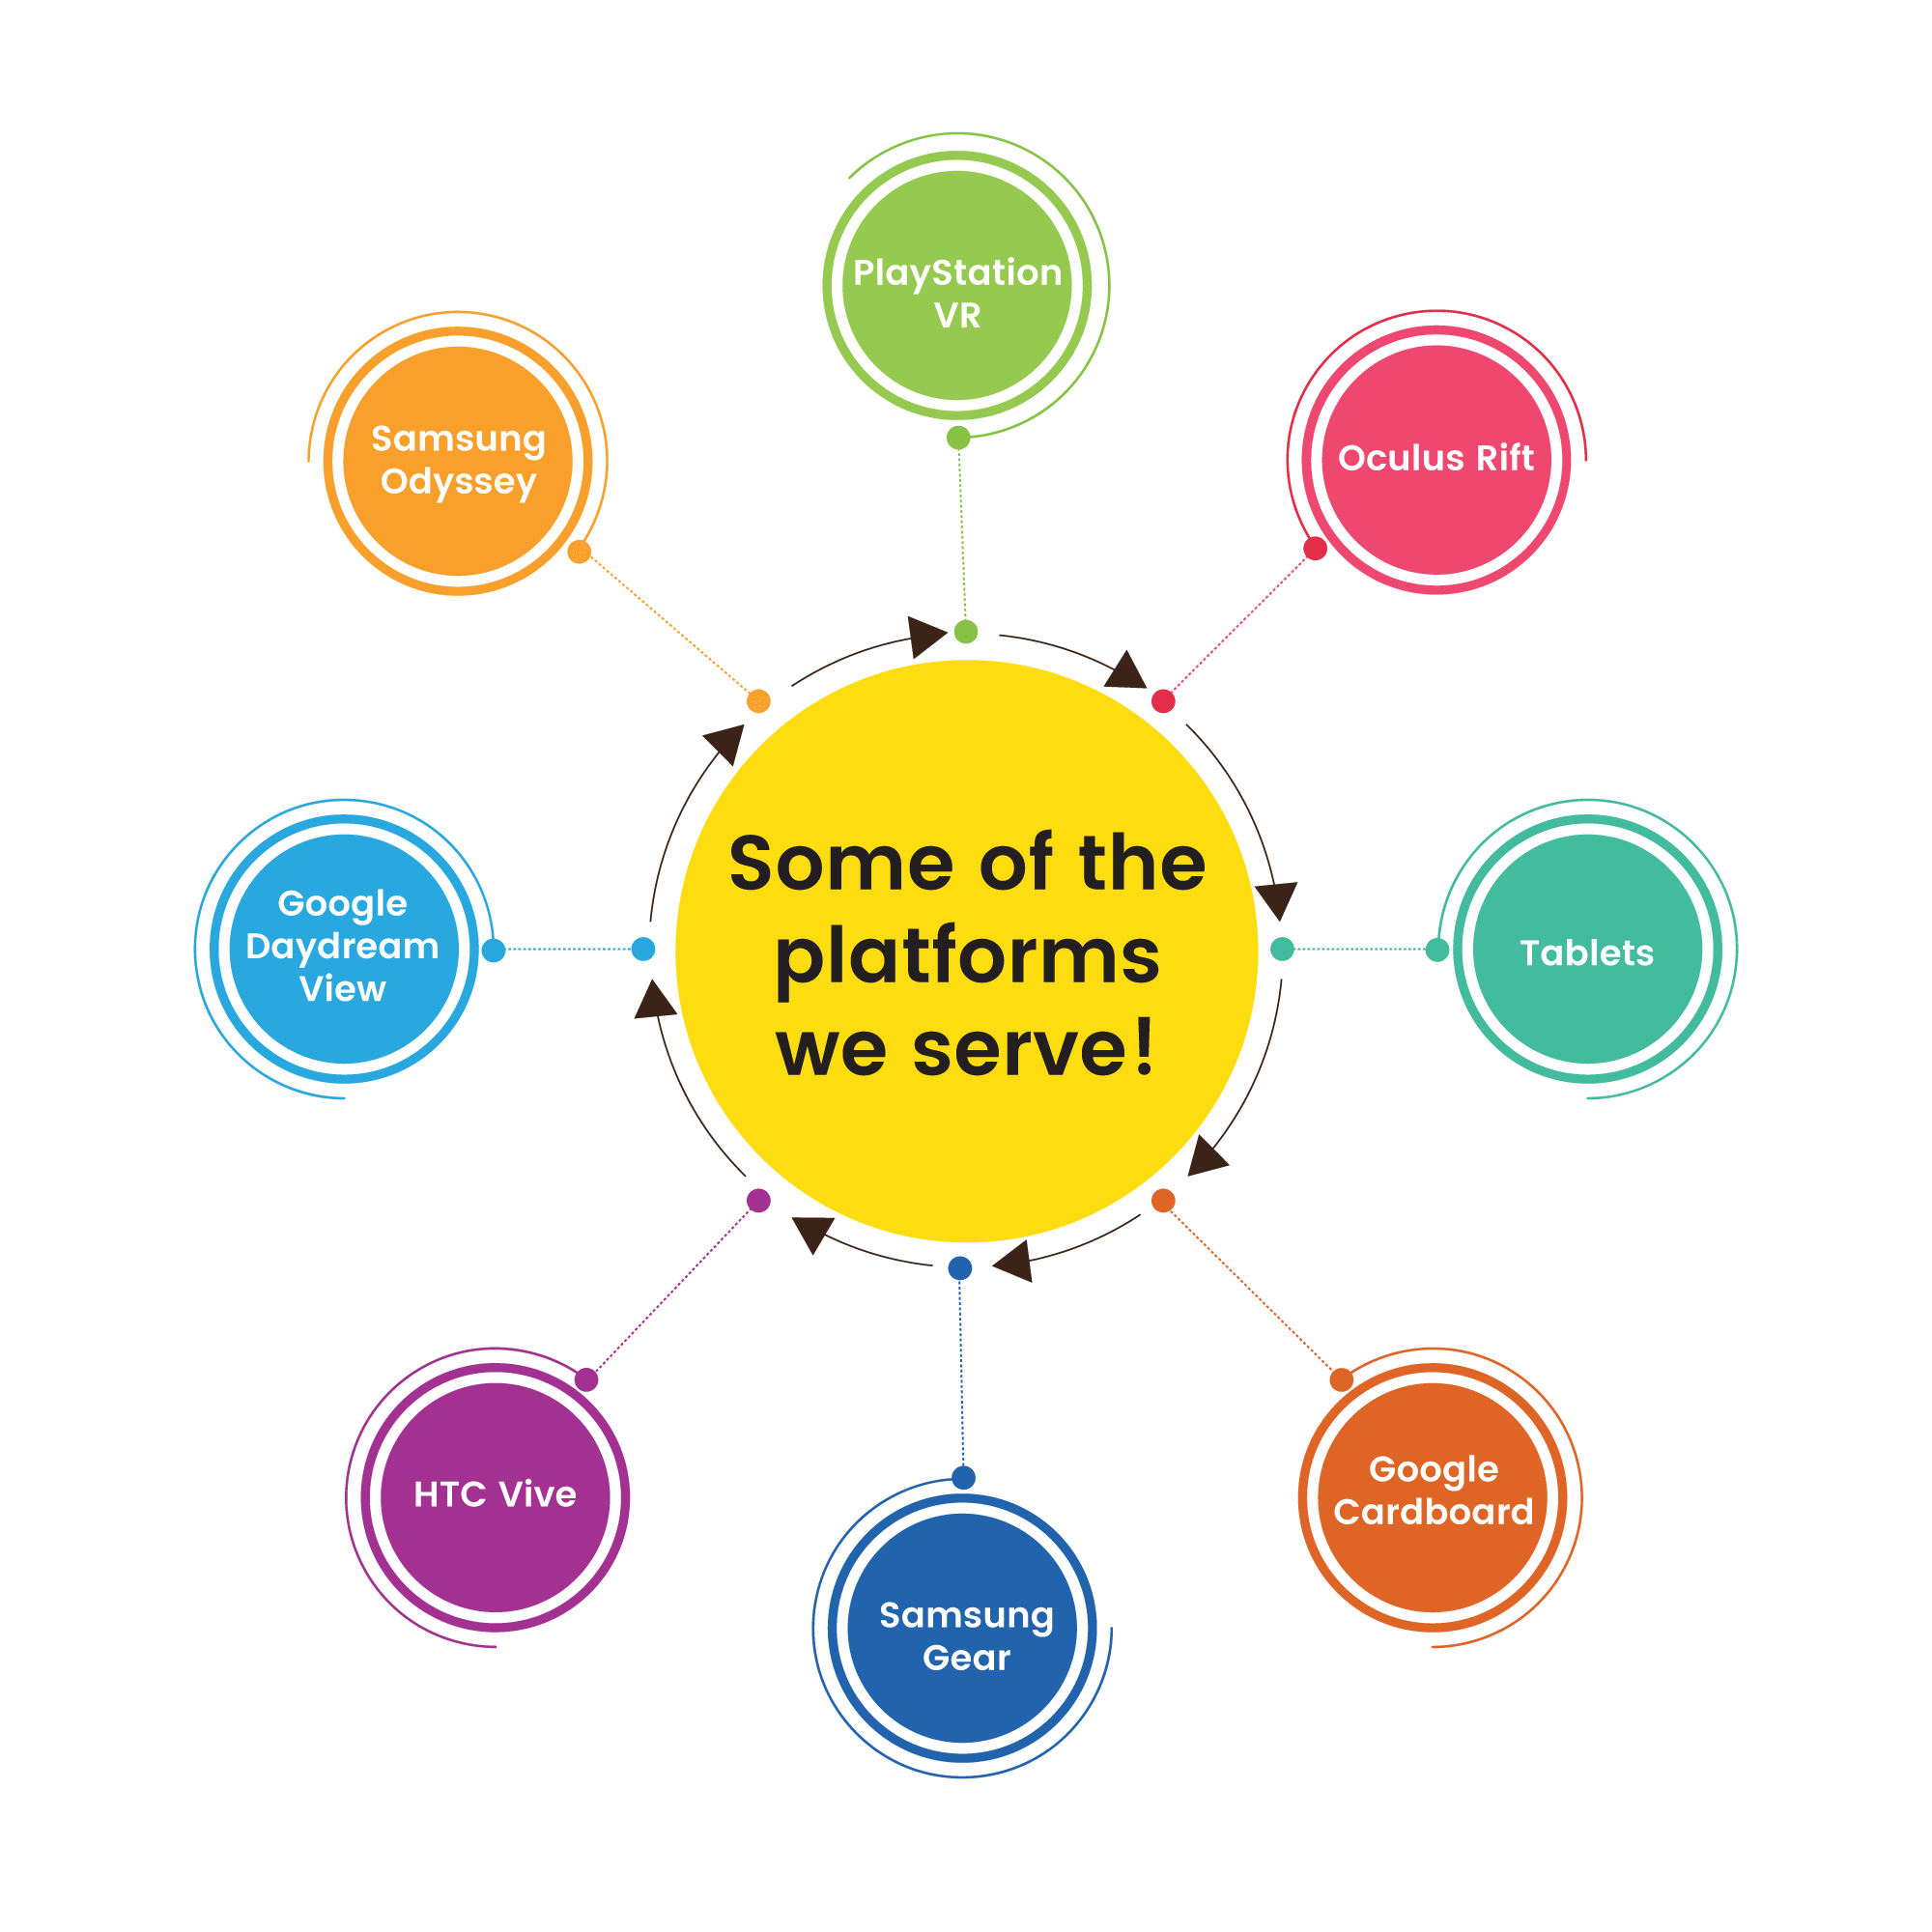 Some of the platforms we serve